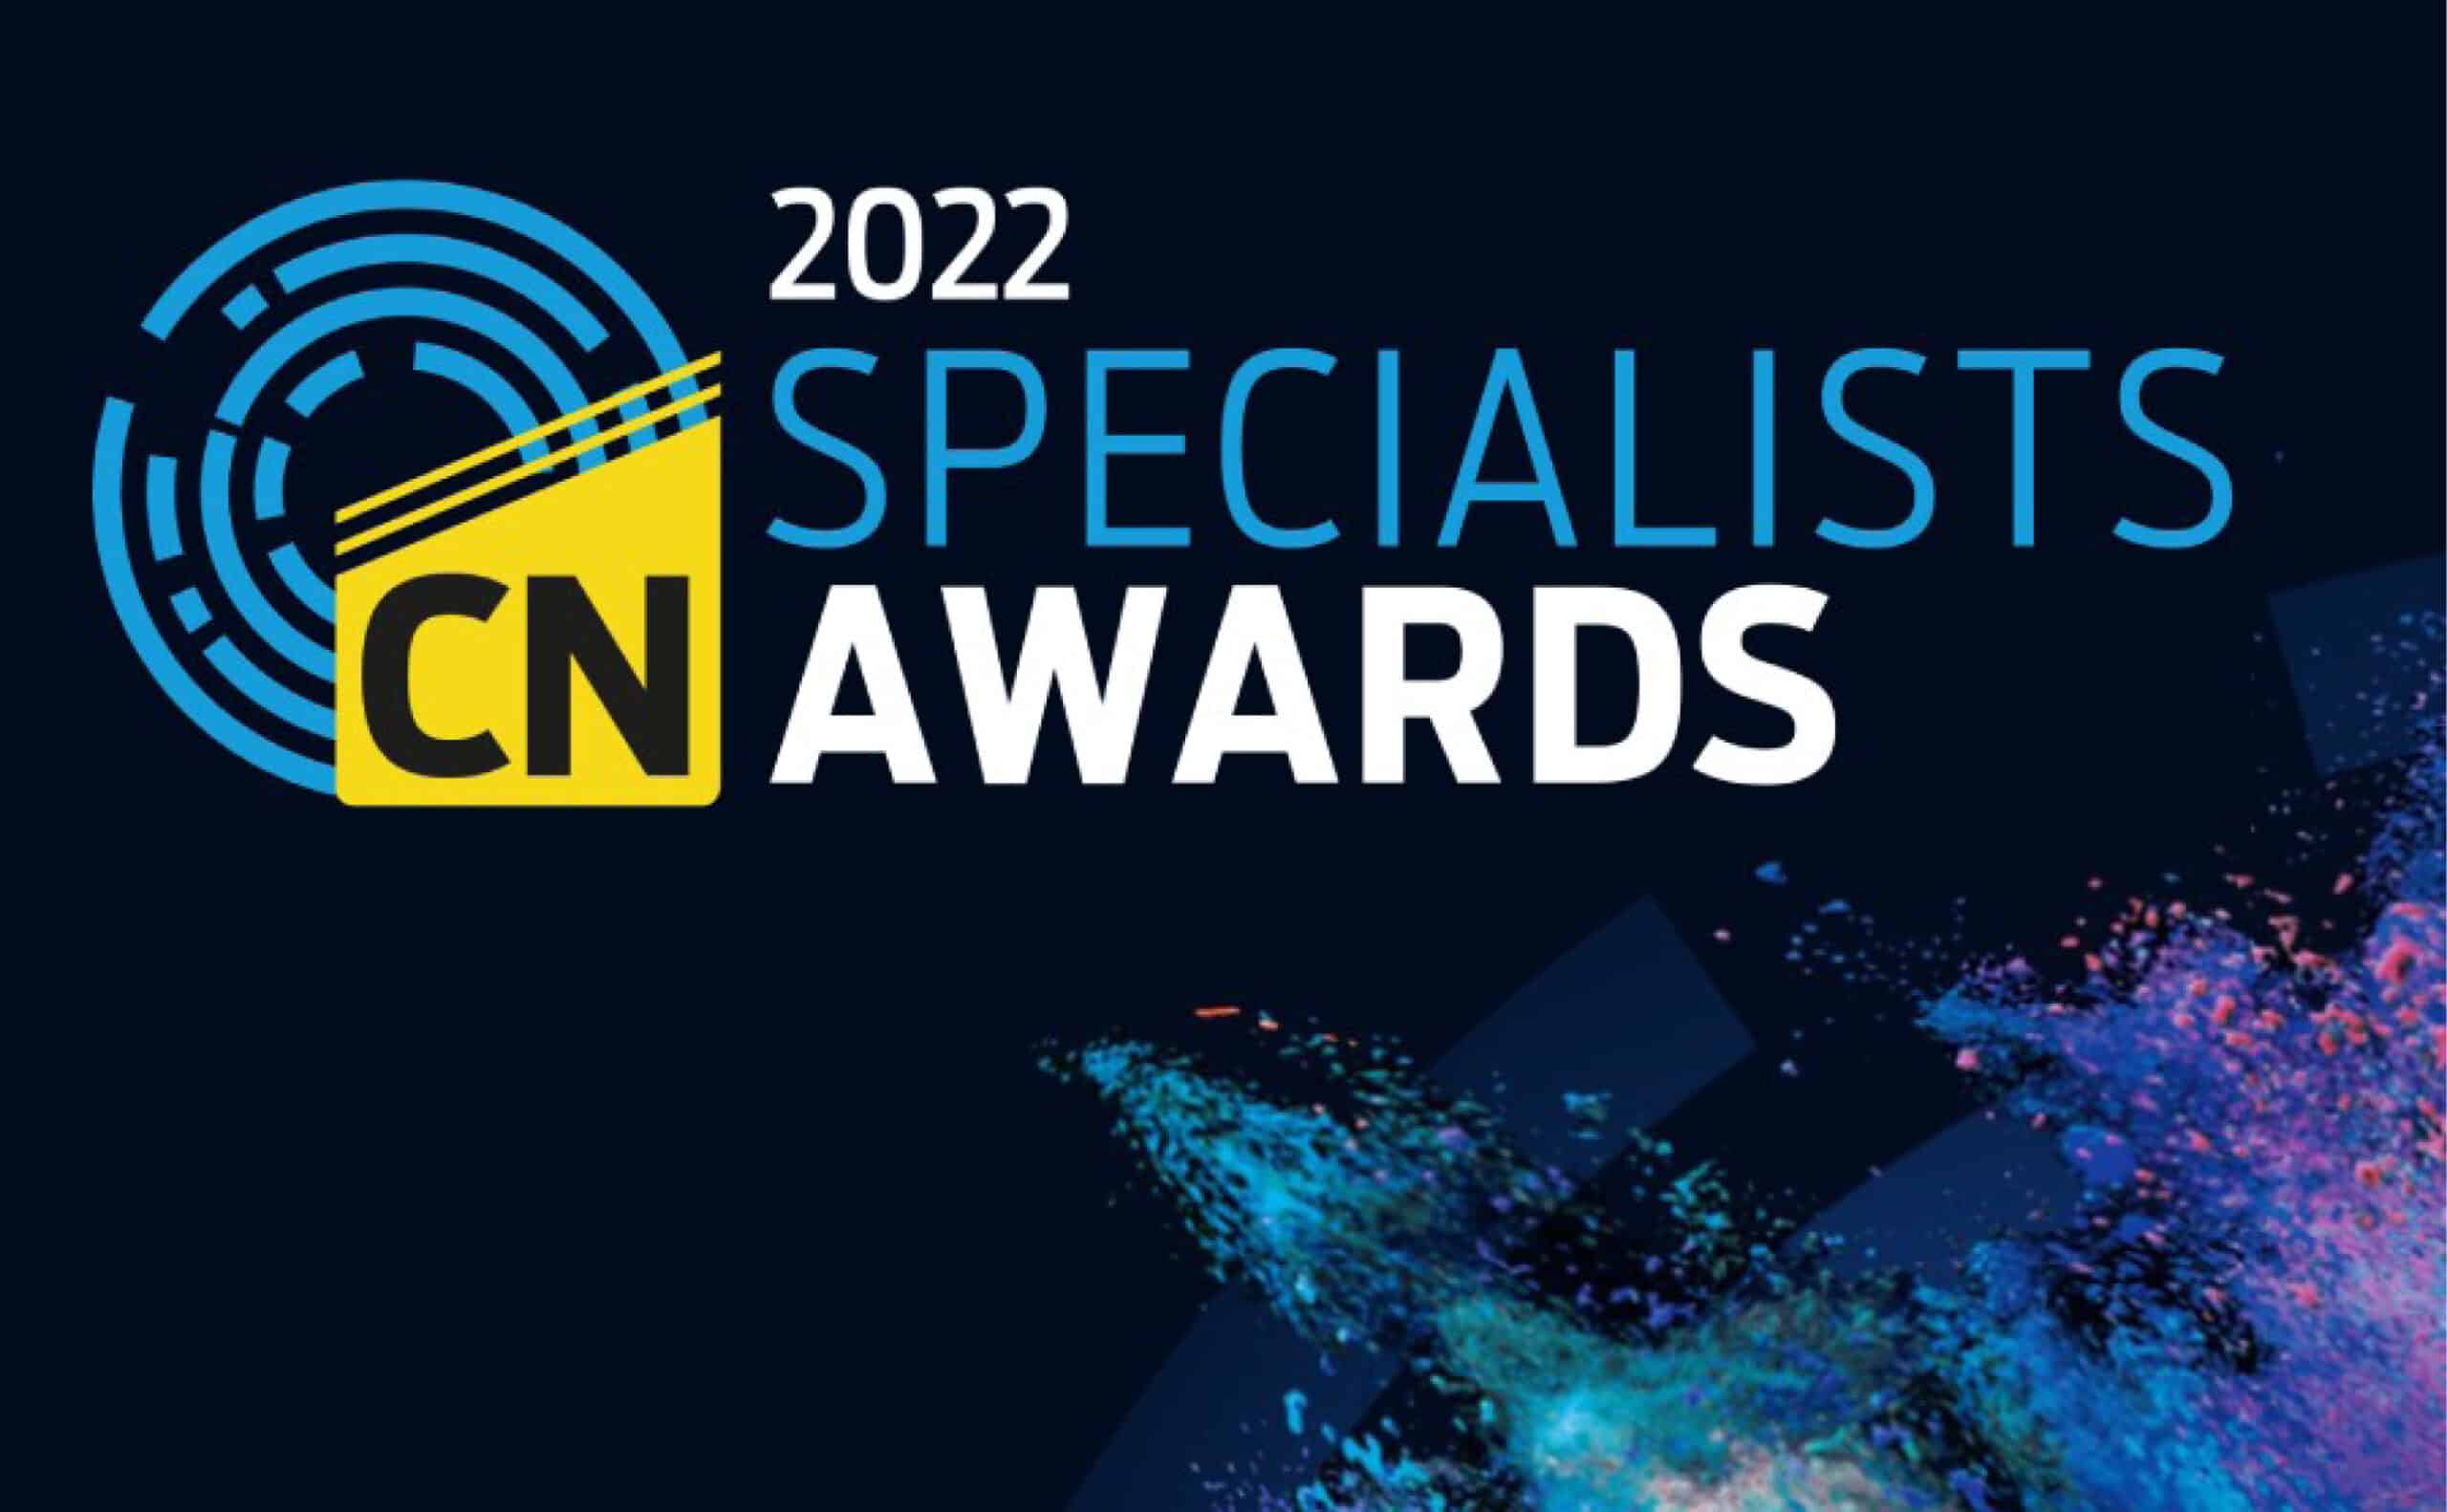 CN Specialists Awards 2022